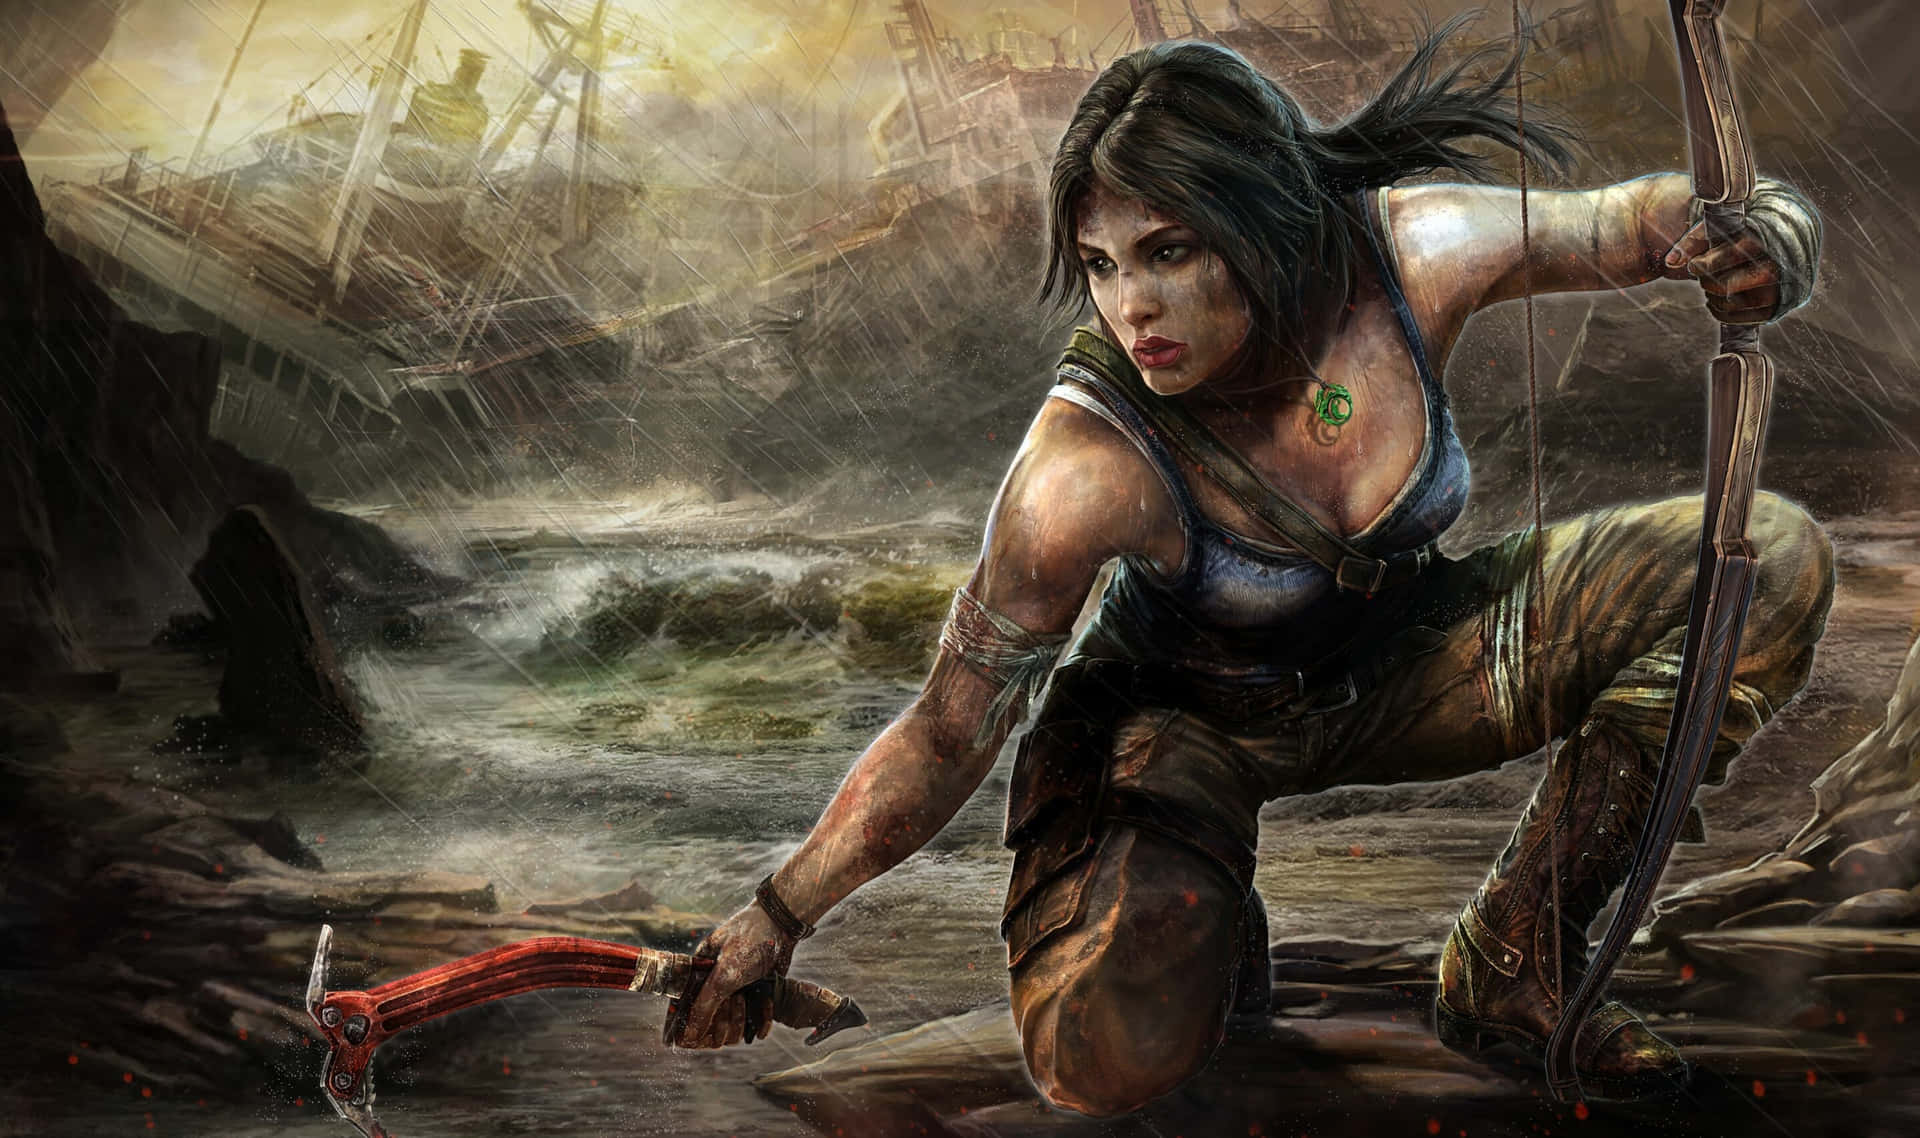 Lara Croft Shipwreck Survival Artwork Wallpaper